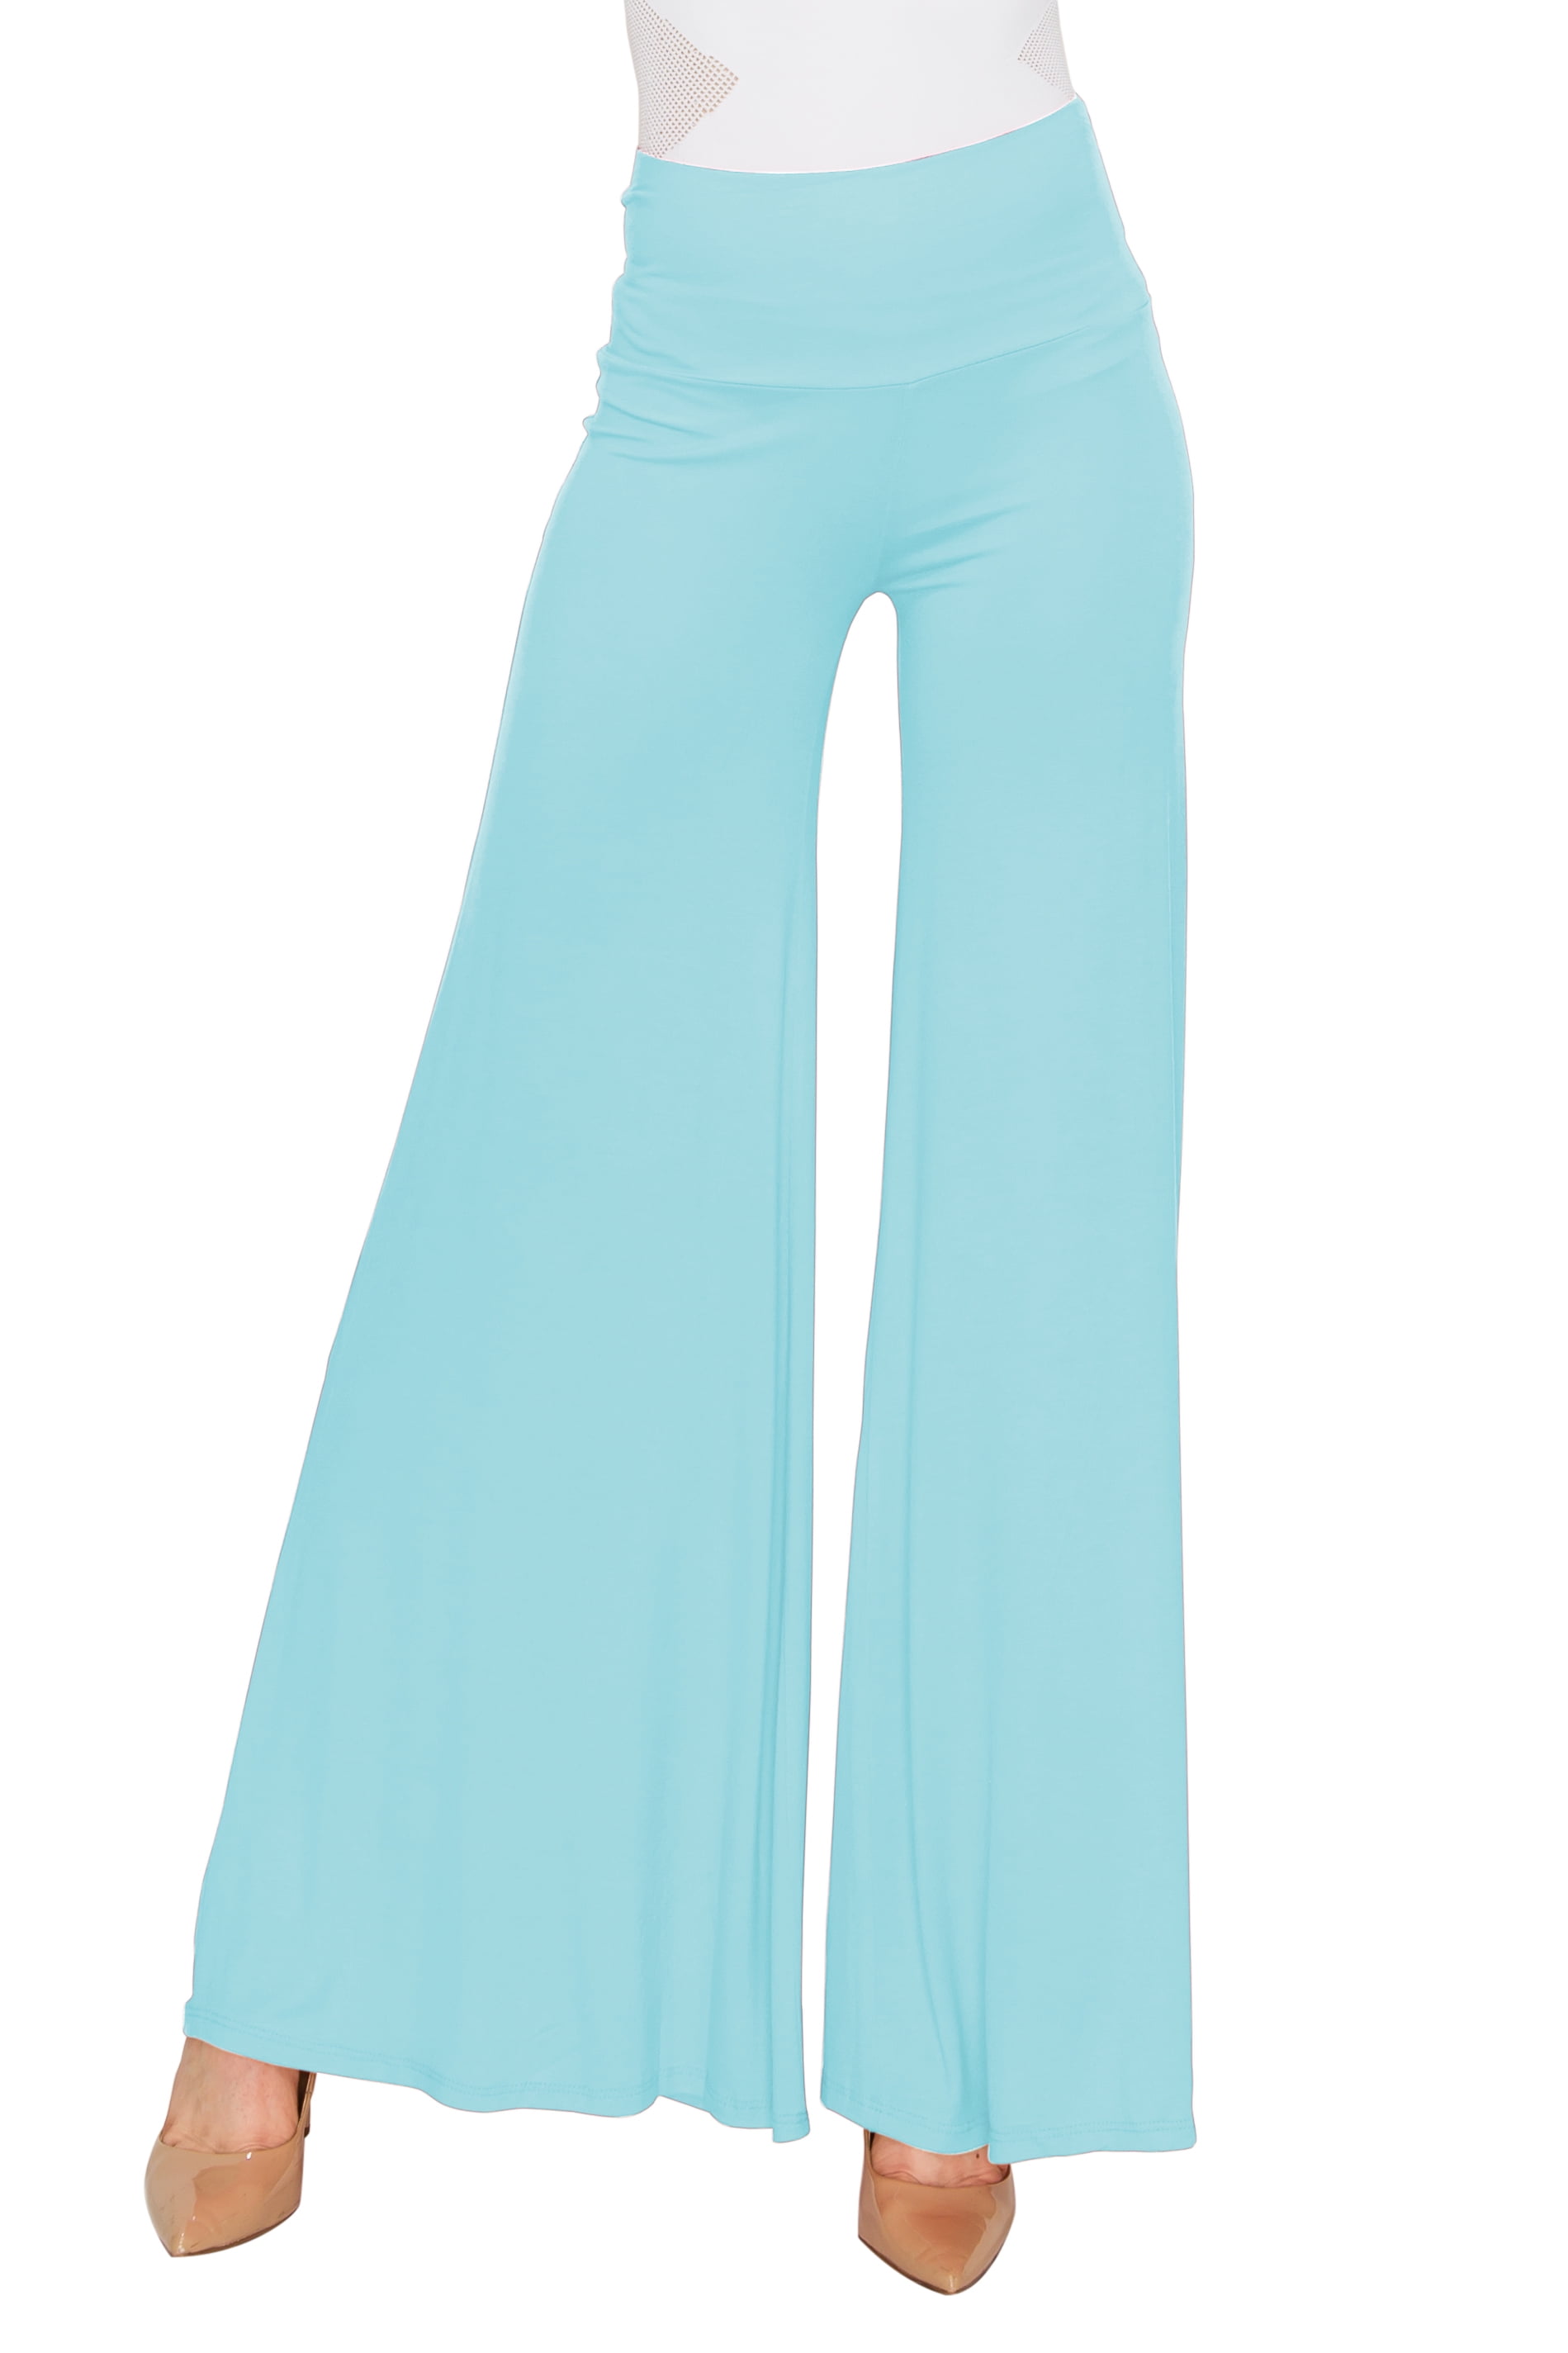 MBJ WB750 Womens Chic Palazzo Lounge Pants L LIGHT_BLUE - Walmart.com